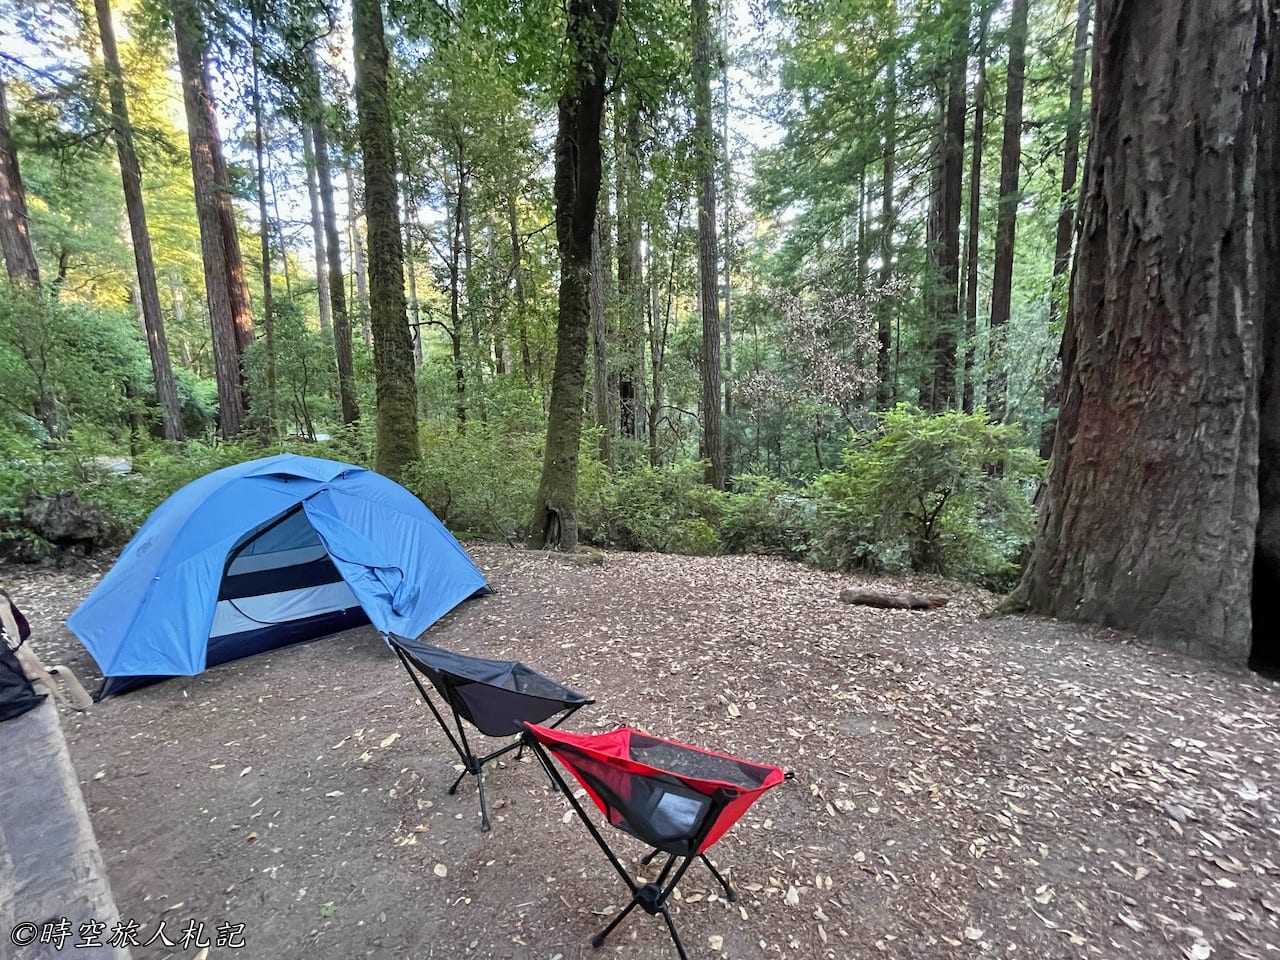 Portola redwood state park 4